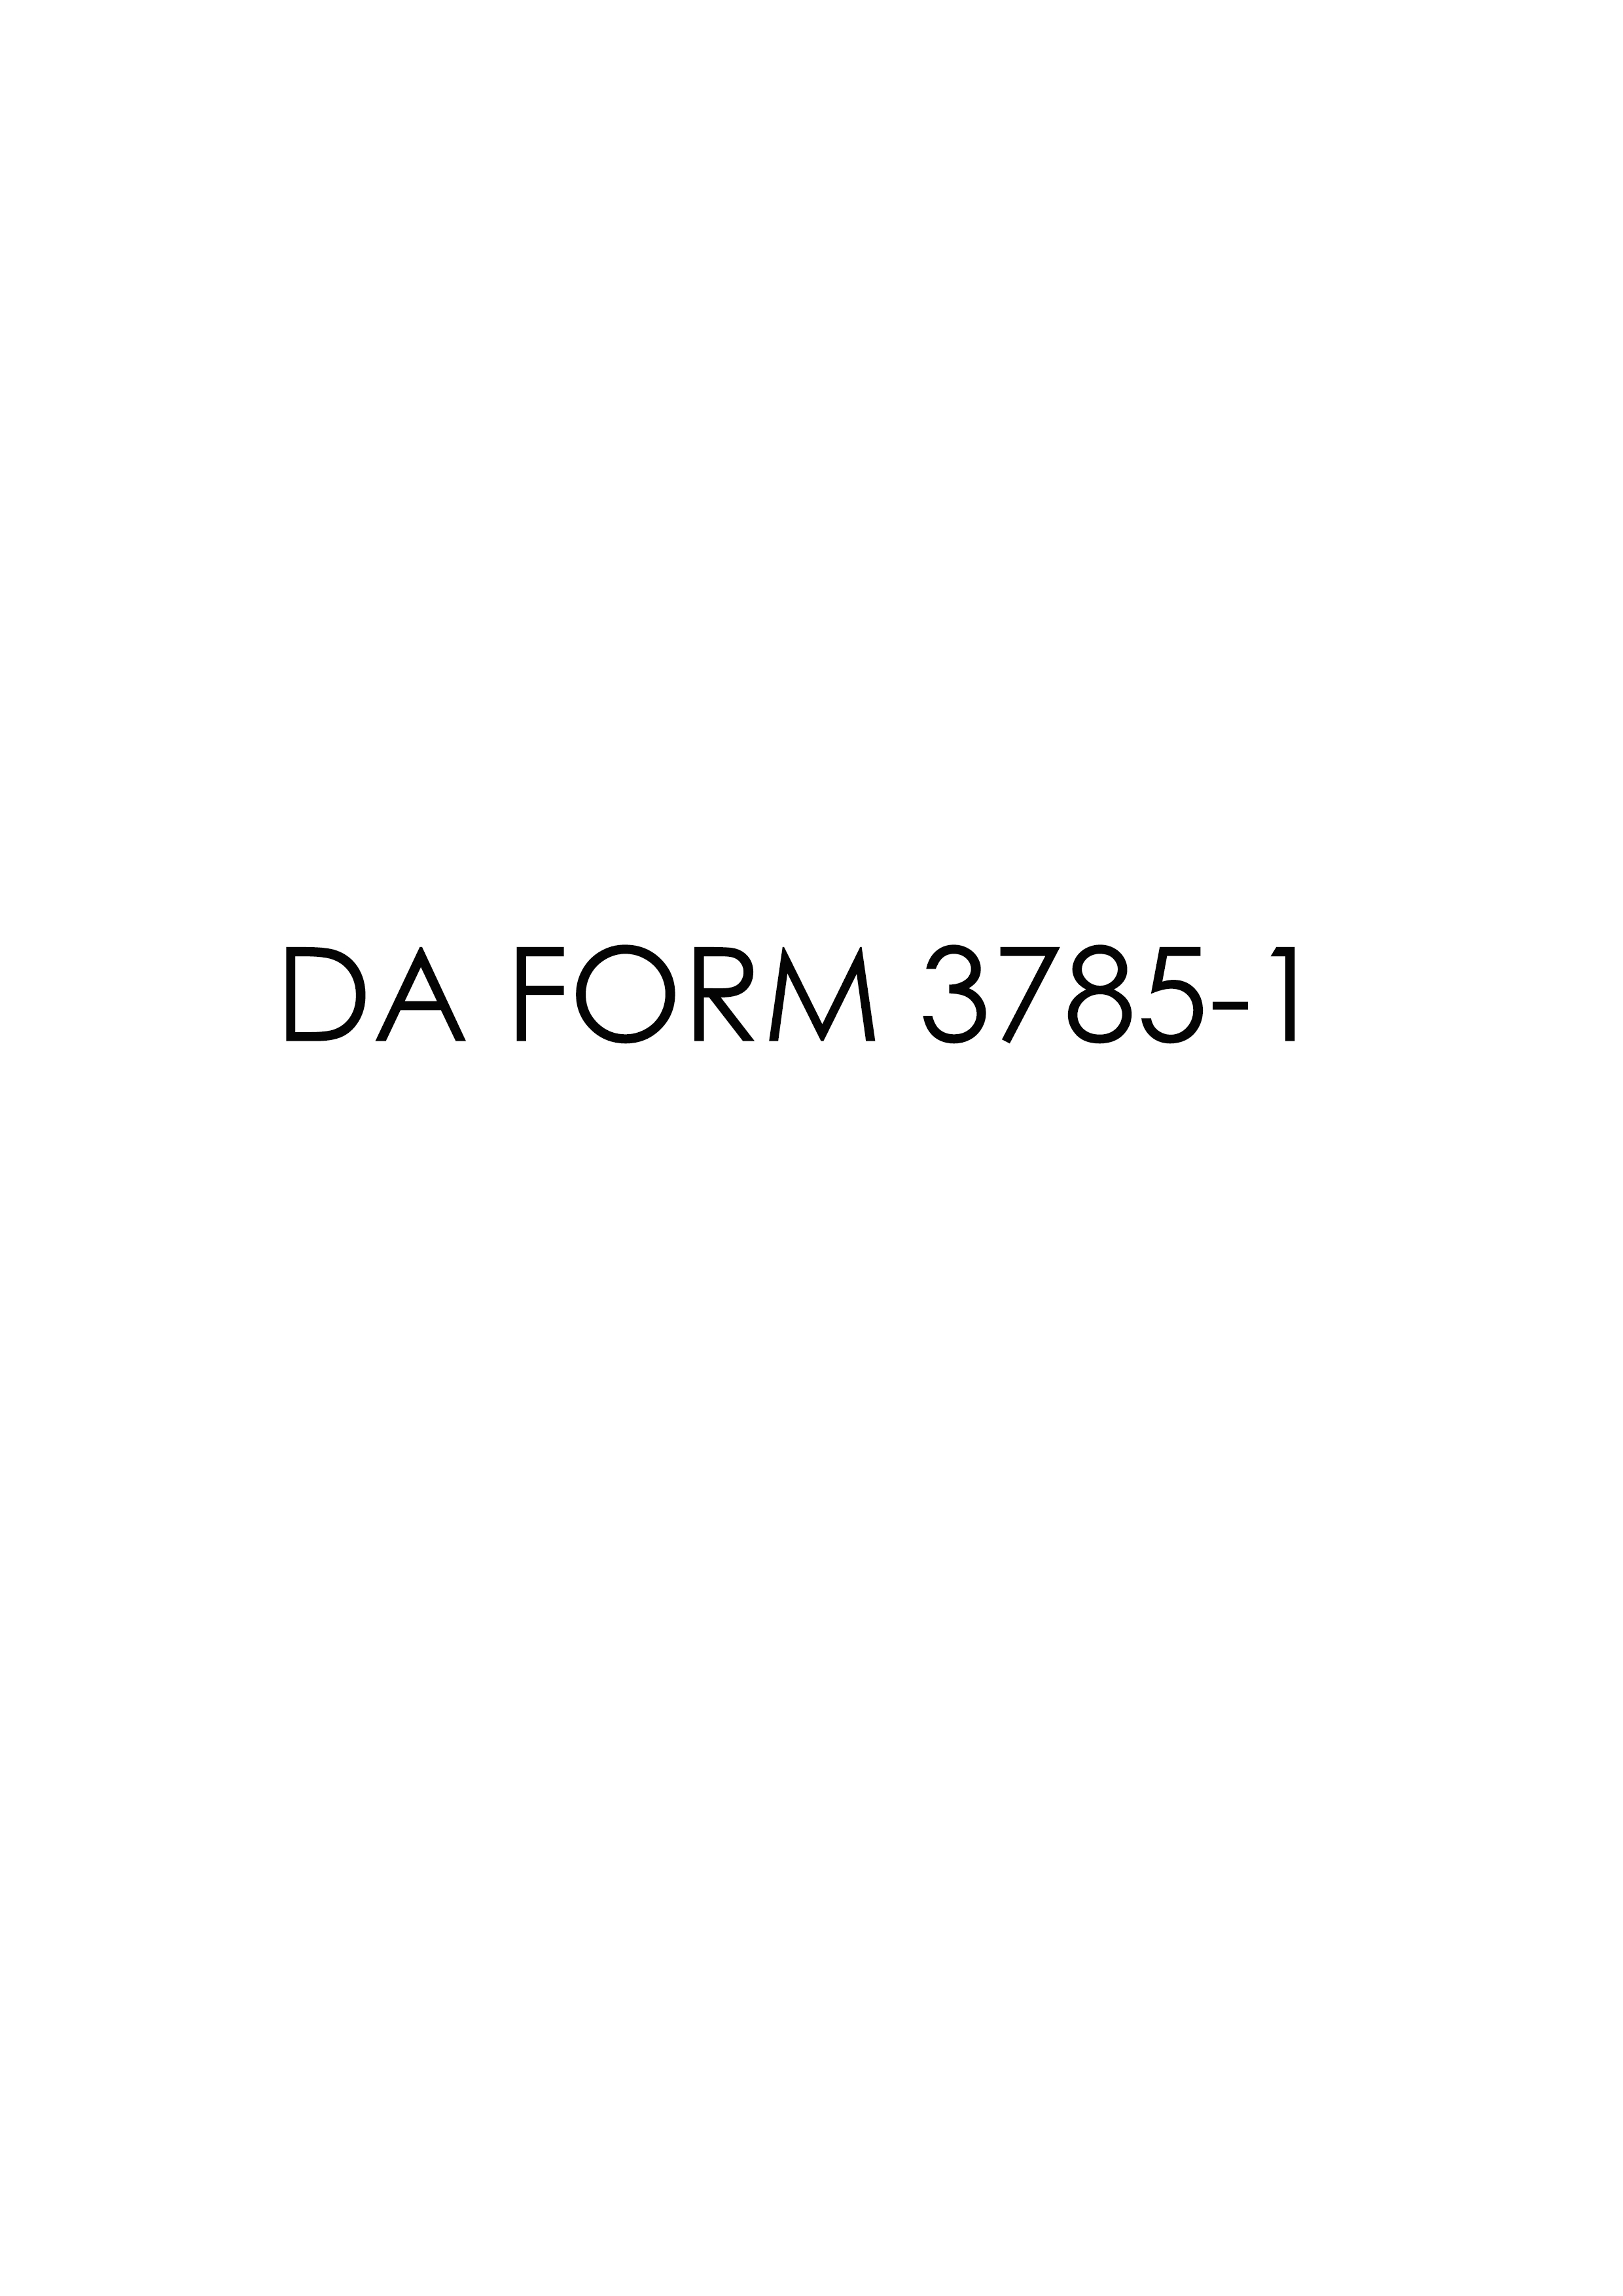 da Form 3785-1 fillable